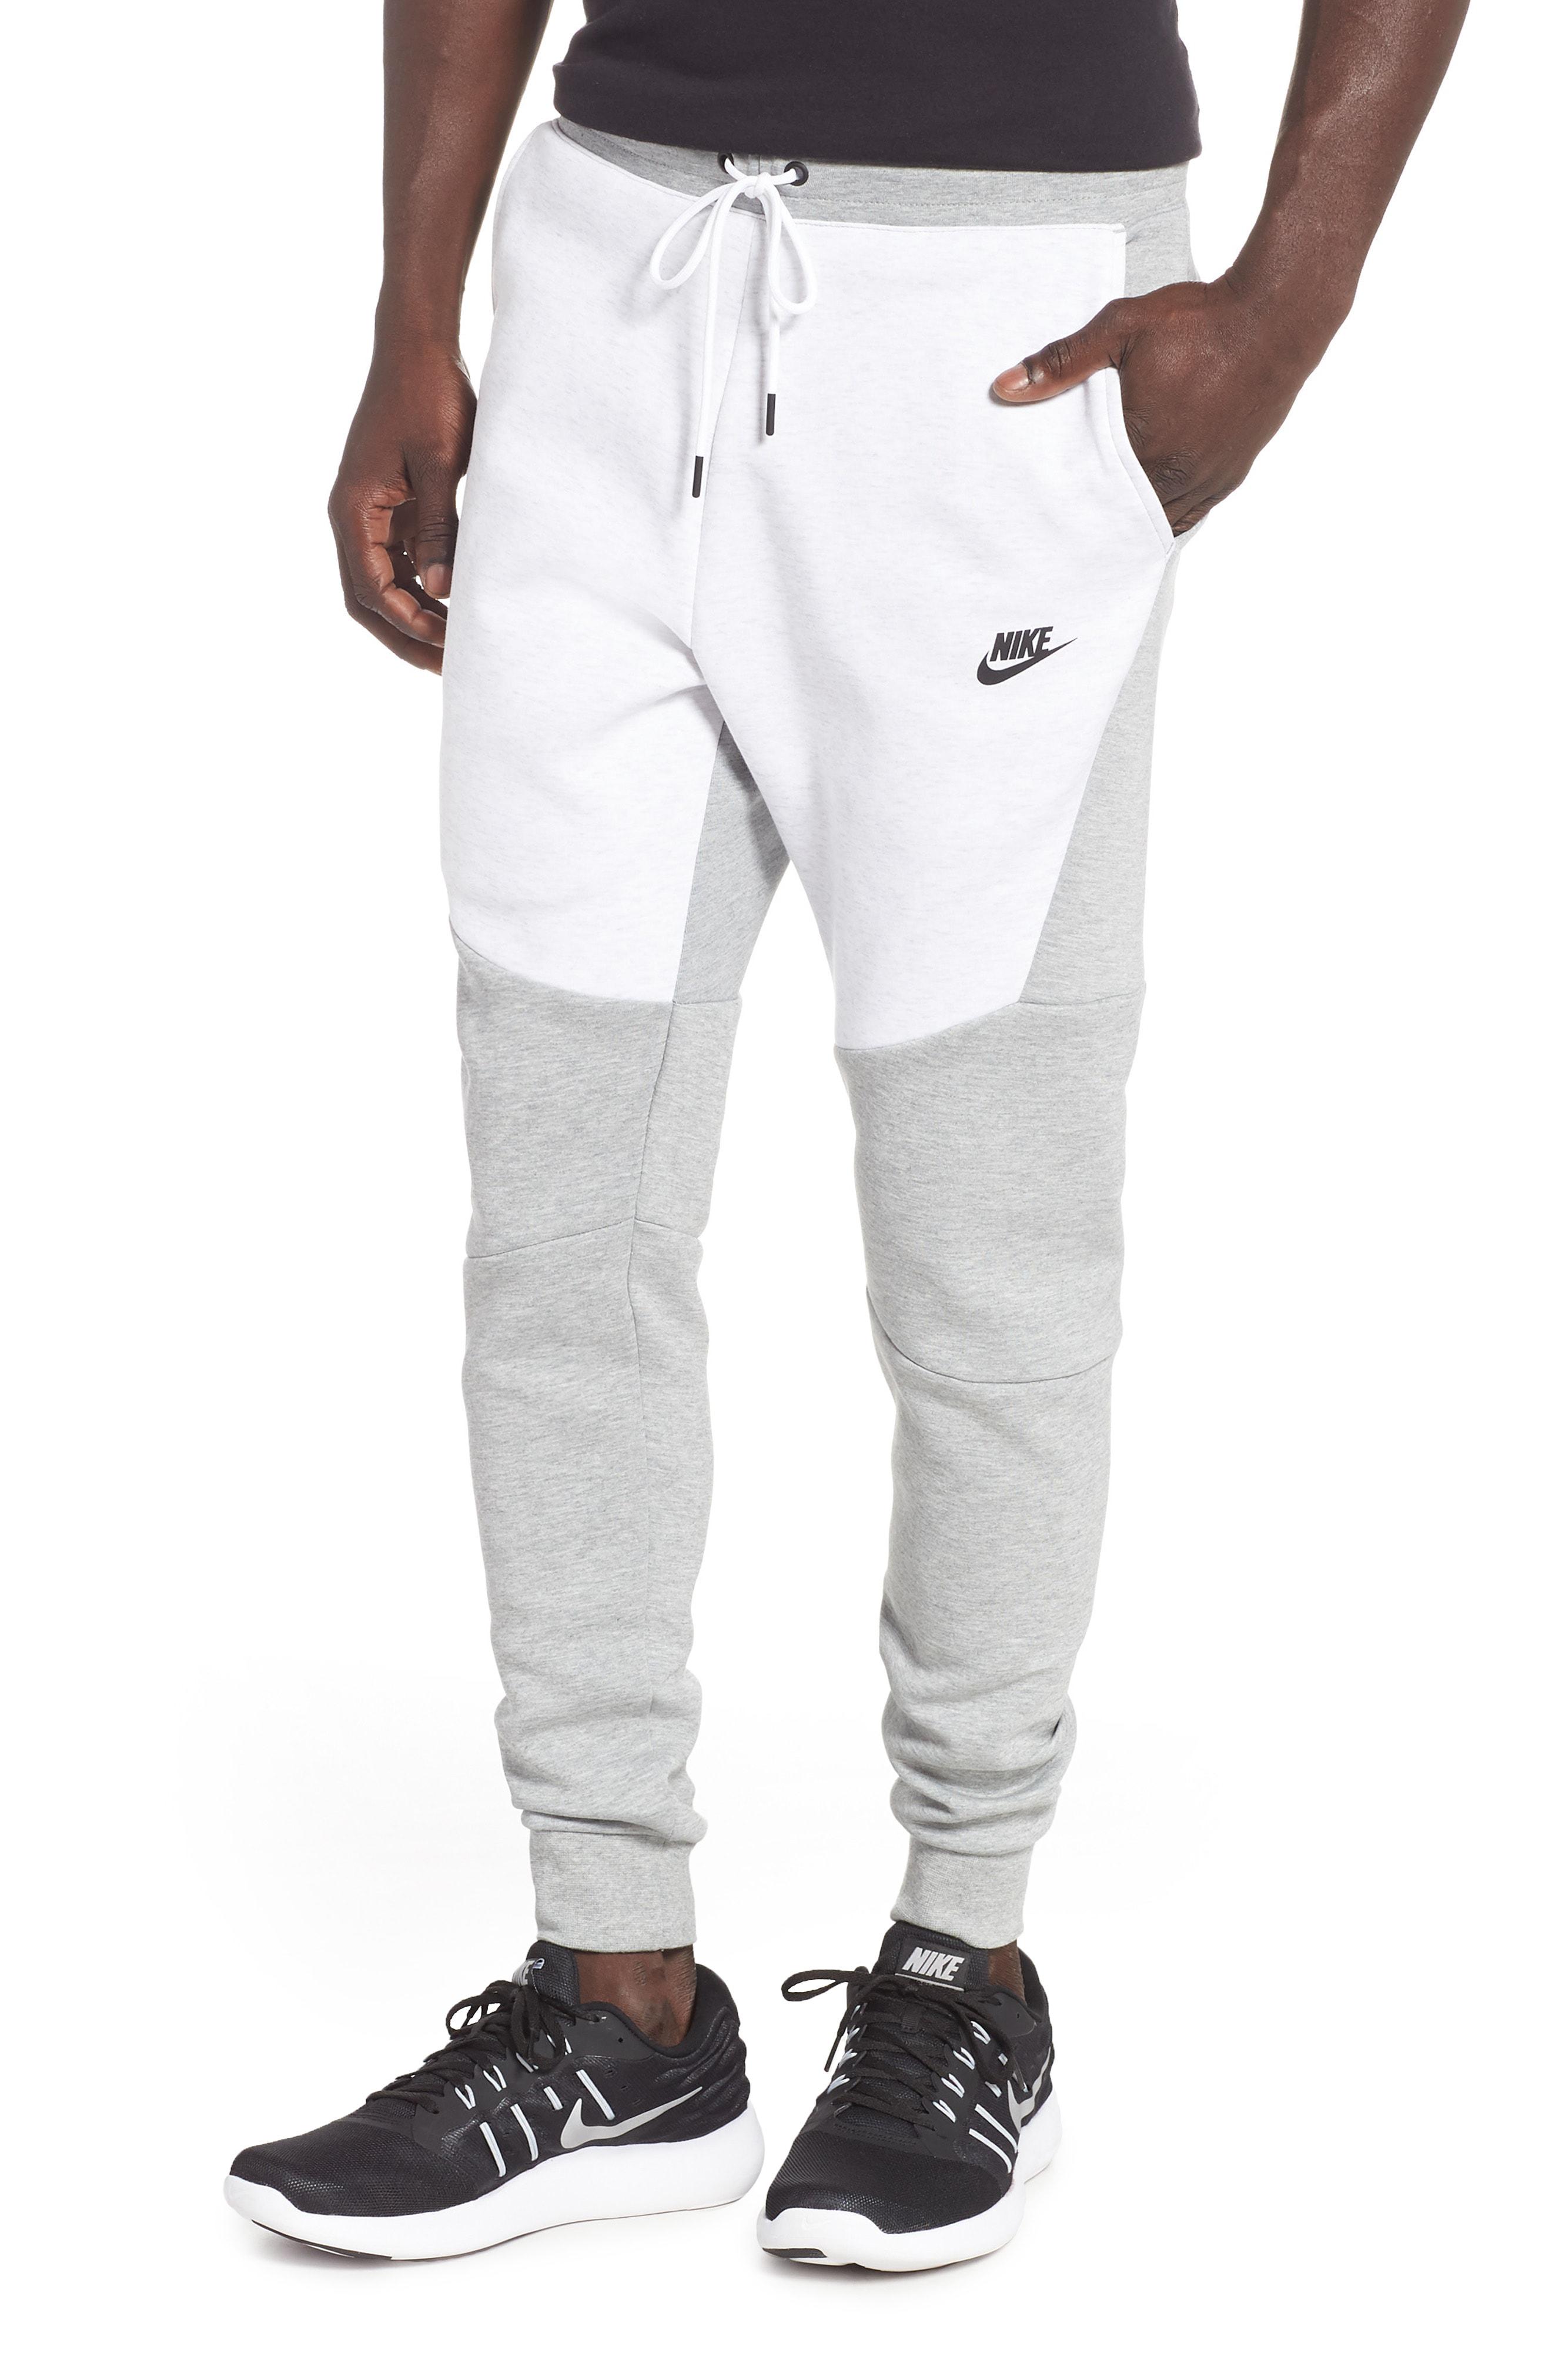 nike tech fleece pants grey and white